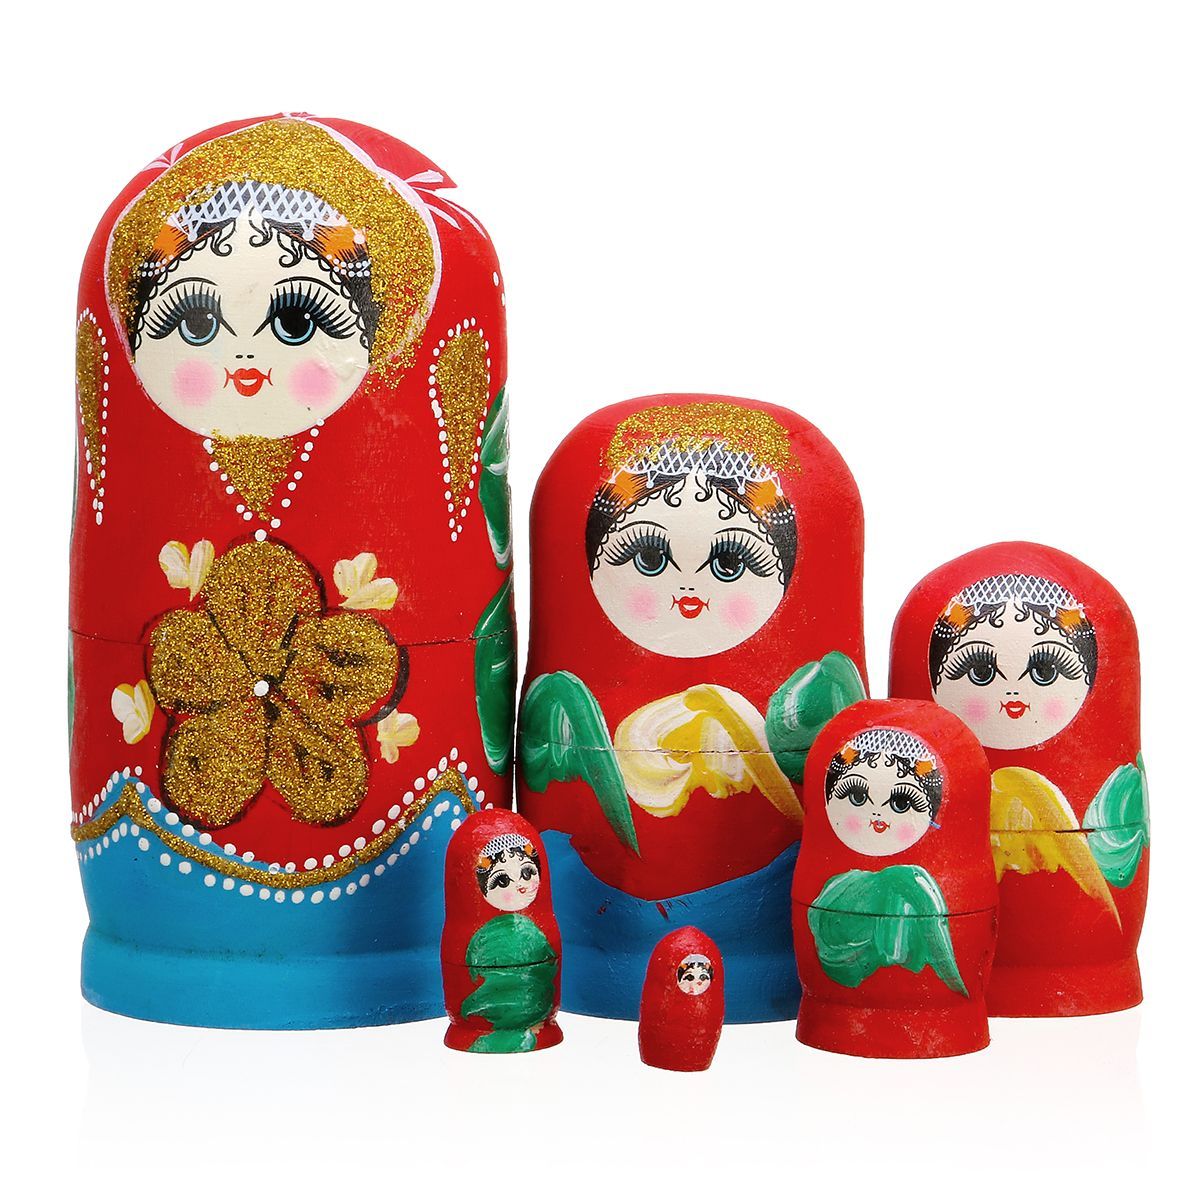 6PcsSet-Russian-Nesting-Dolls-Hand-Painted-Matryoshka-Babushka-Kids-Toy-Gift-Decorations-1555221